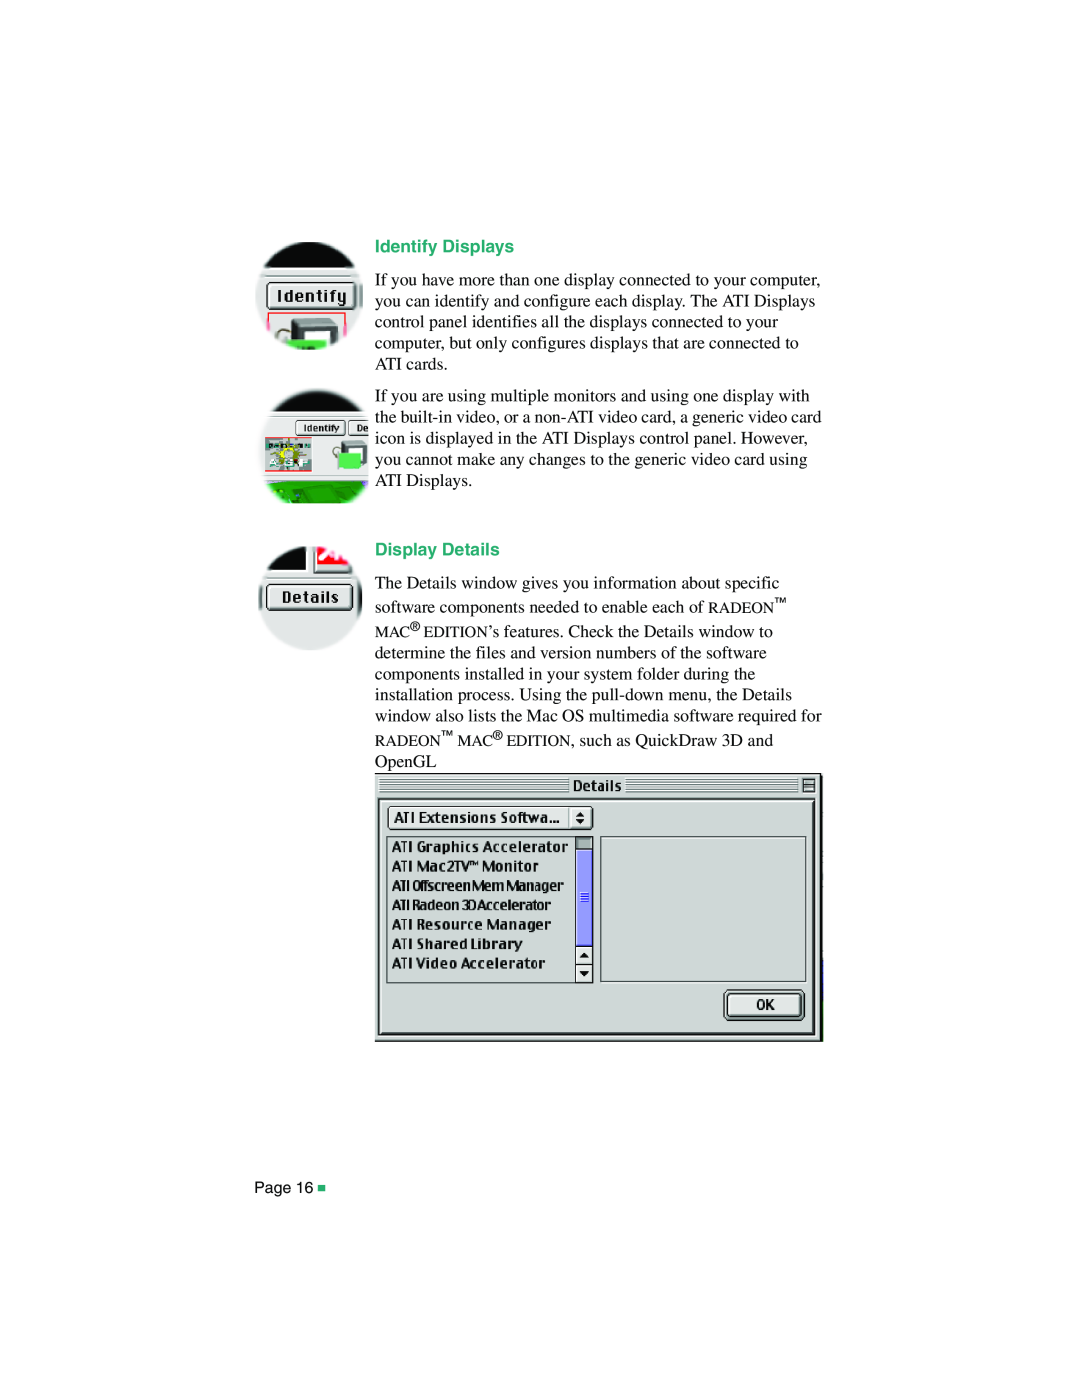 ATI Technologies 107-40214-20, RADEON MAC EDITION manual Identify Displays, Display Details 